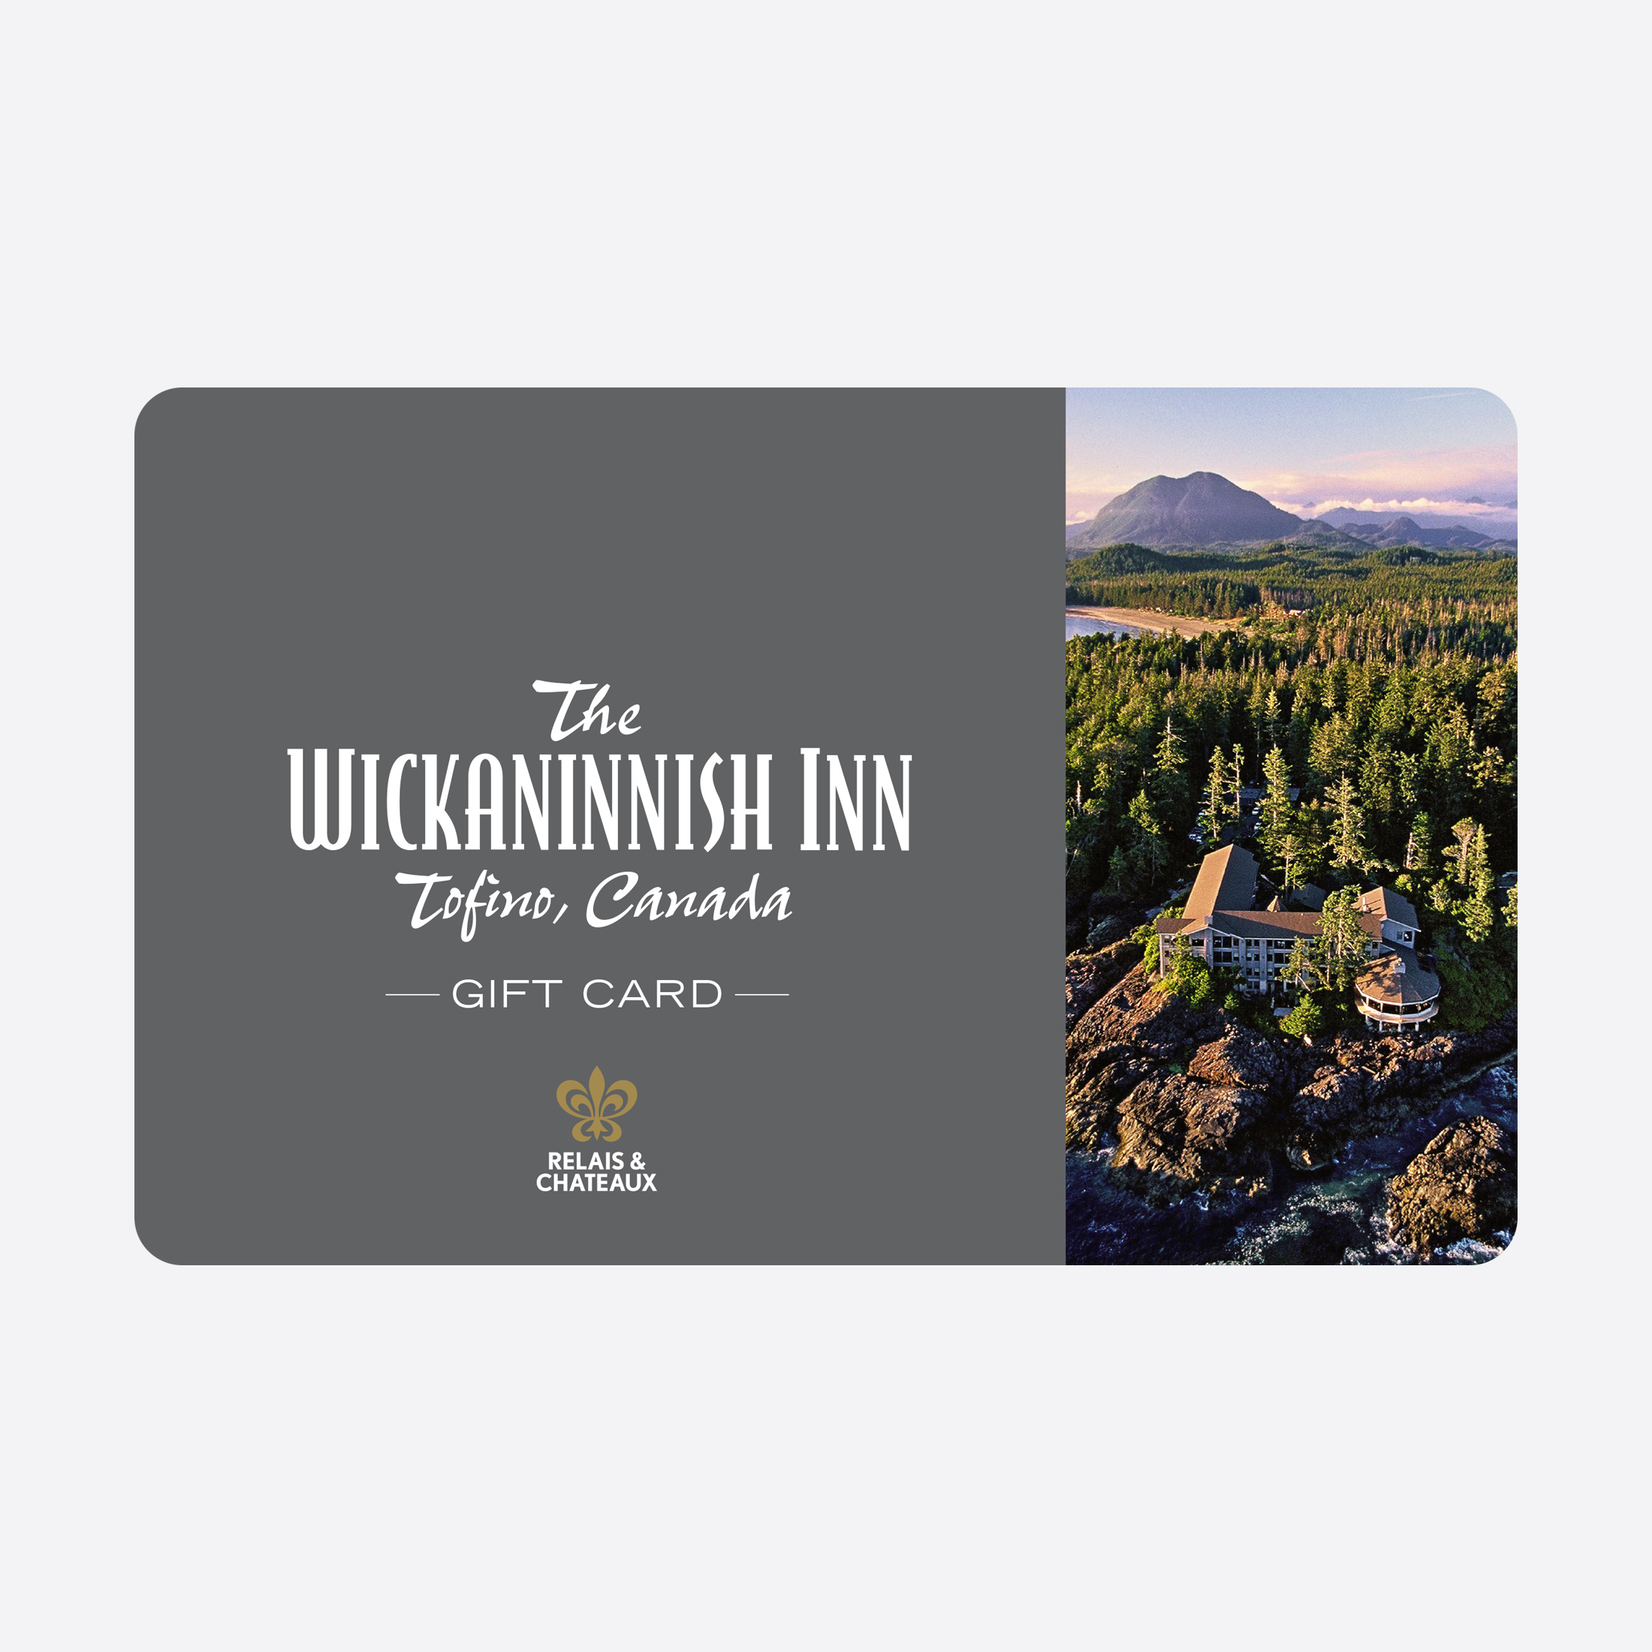 Wickaninnish Inn $625.00 Gift Card